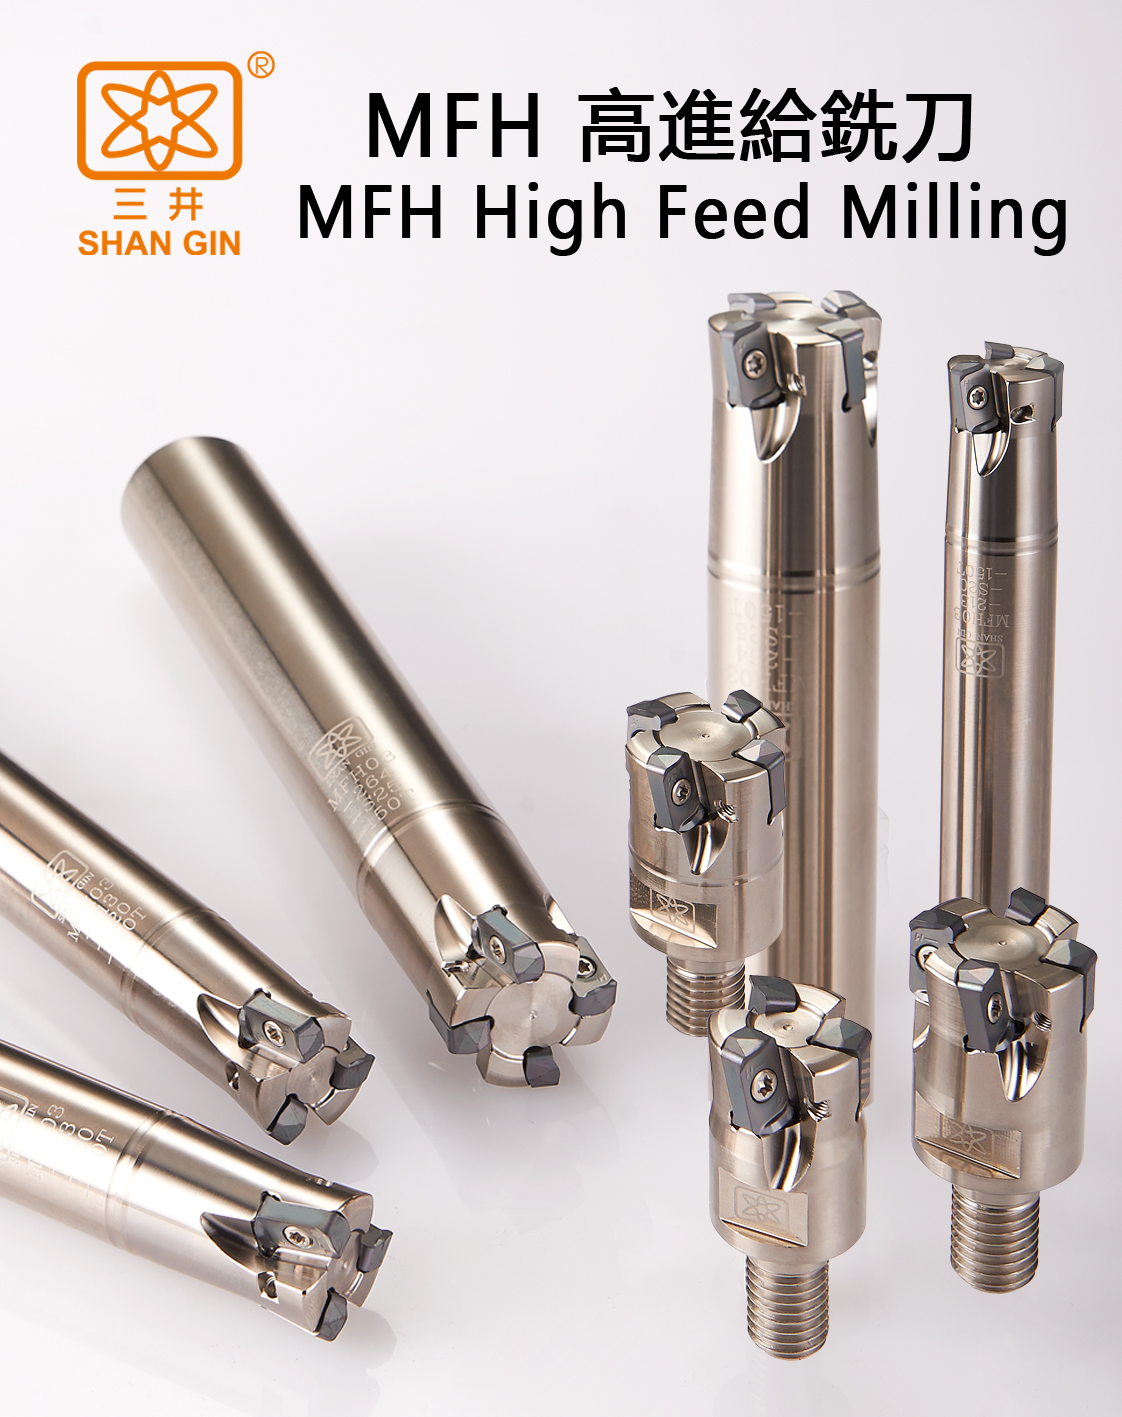 Catalog|MFH High Feed Milling